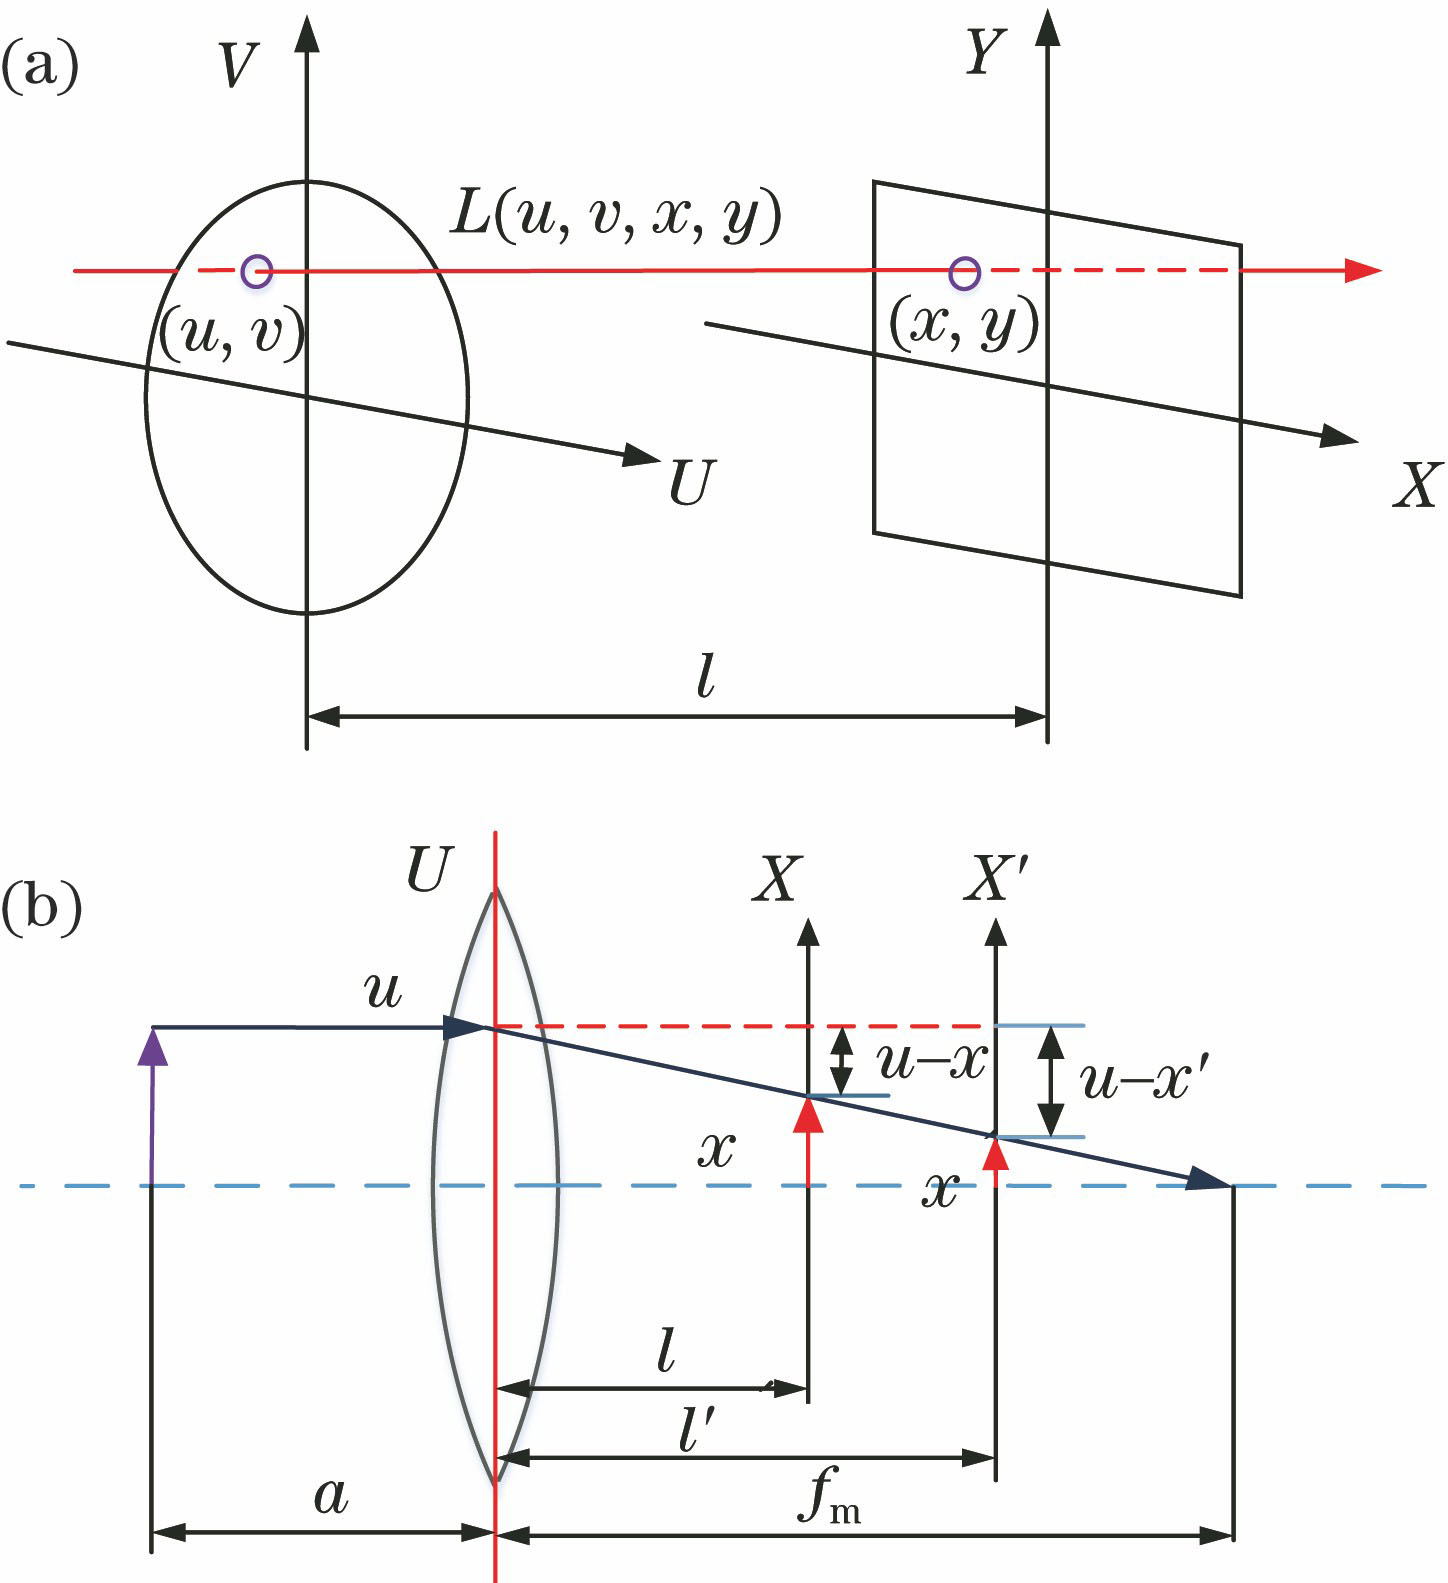 Light field schematic. (a) Diagram of light field biplane parameterization; (b) refocusing schematic